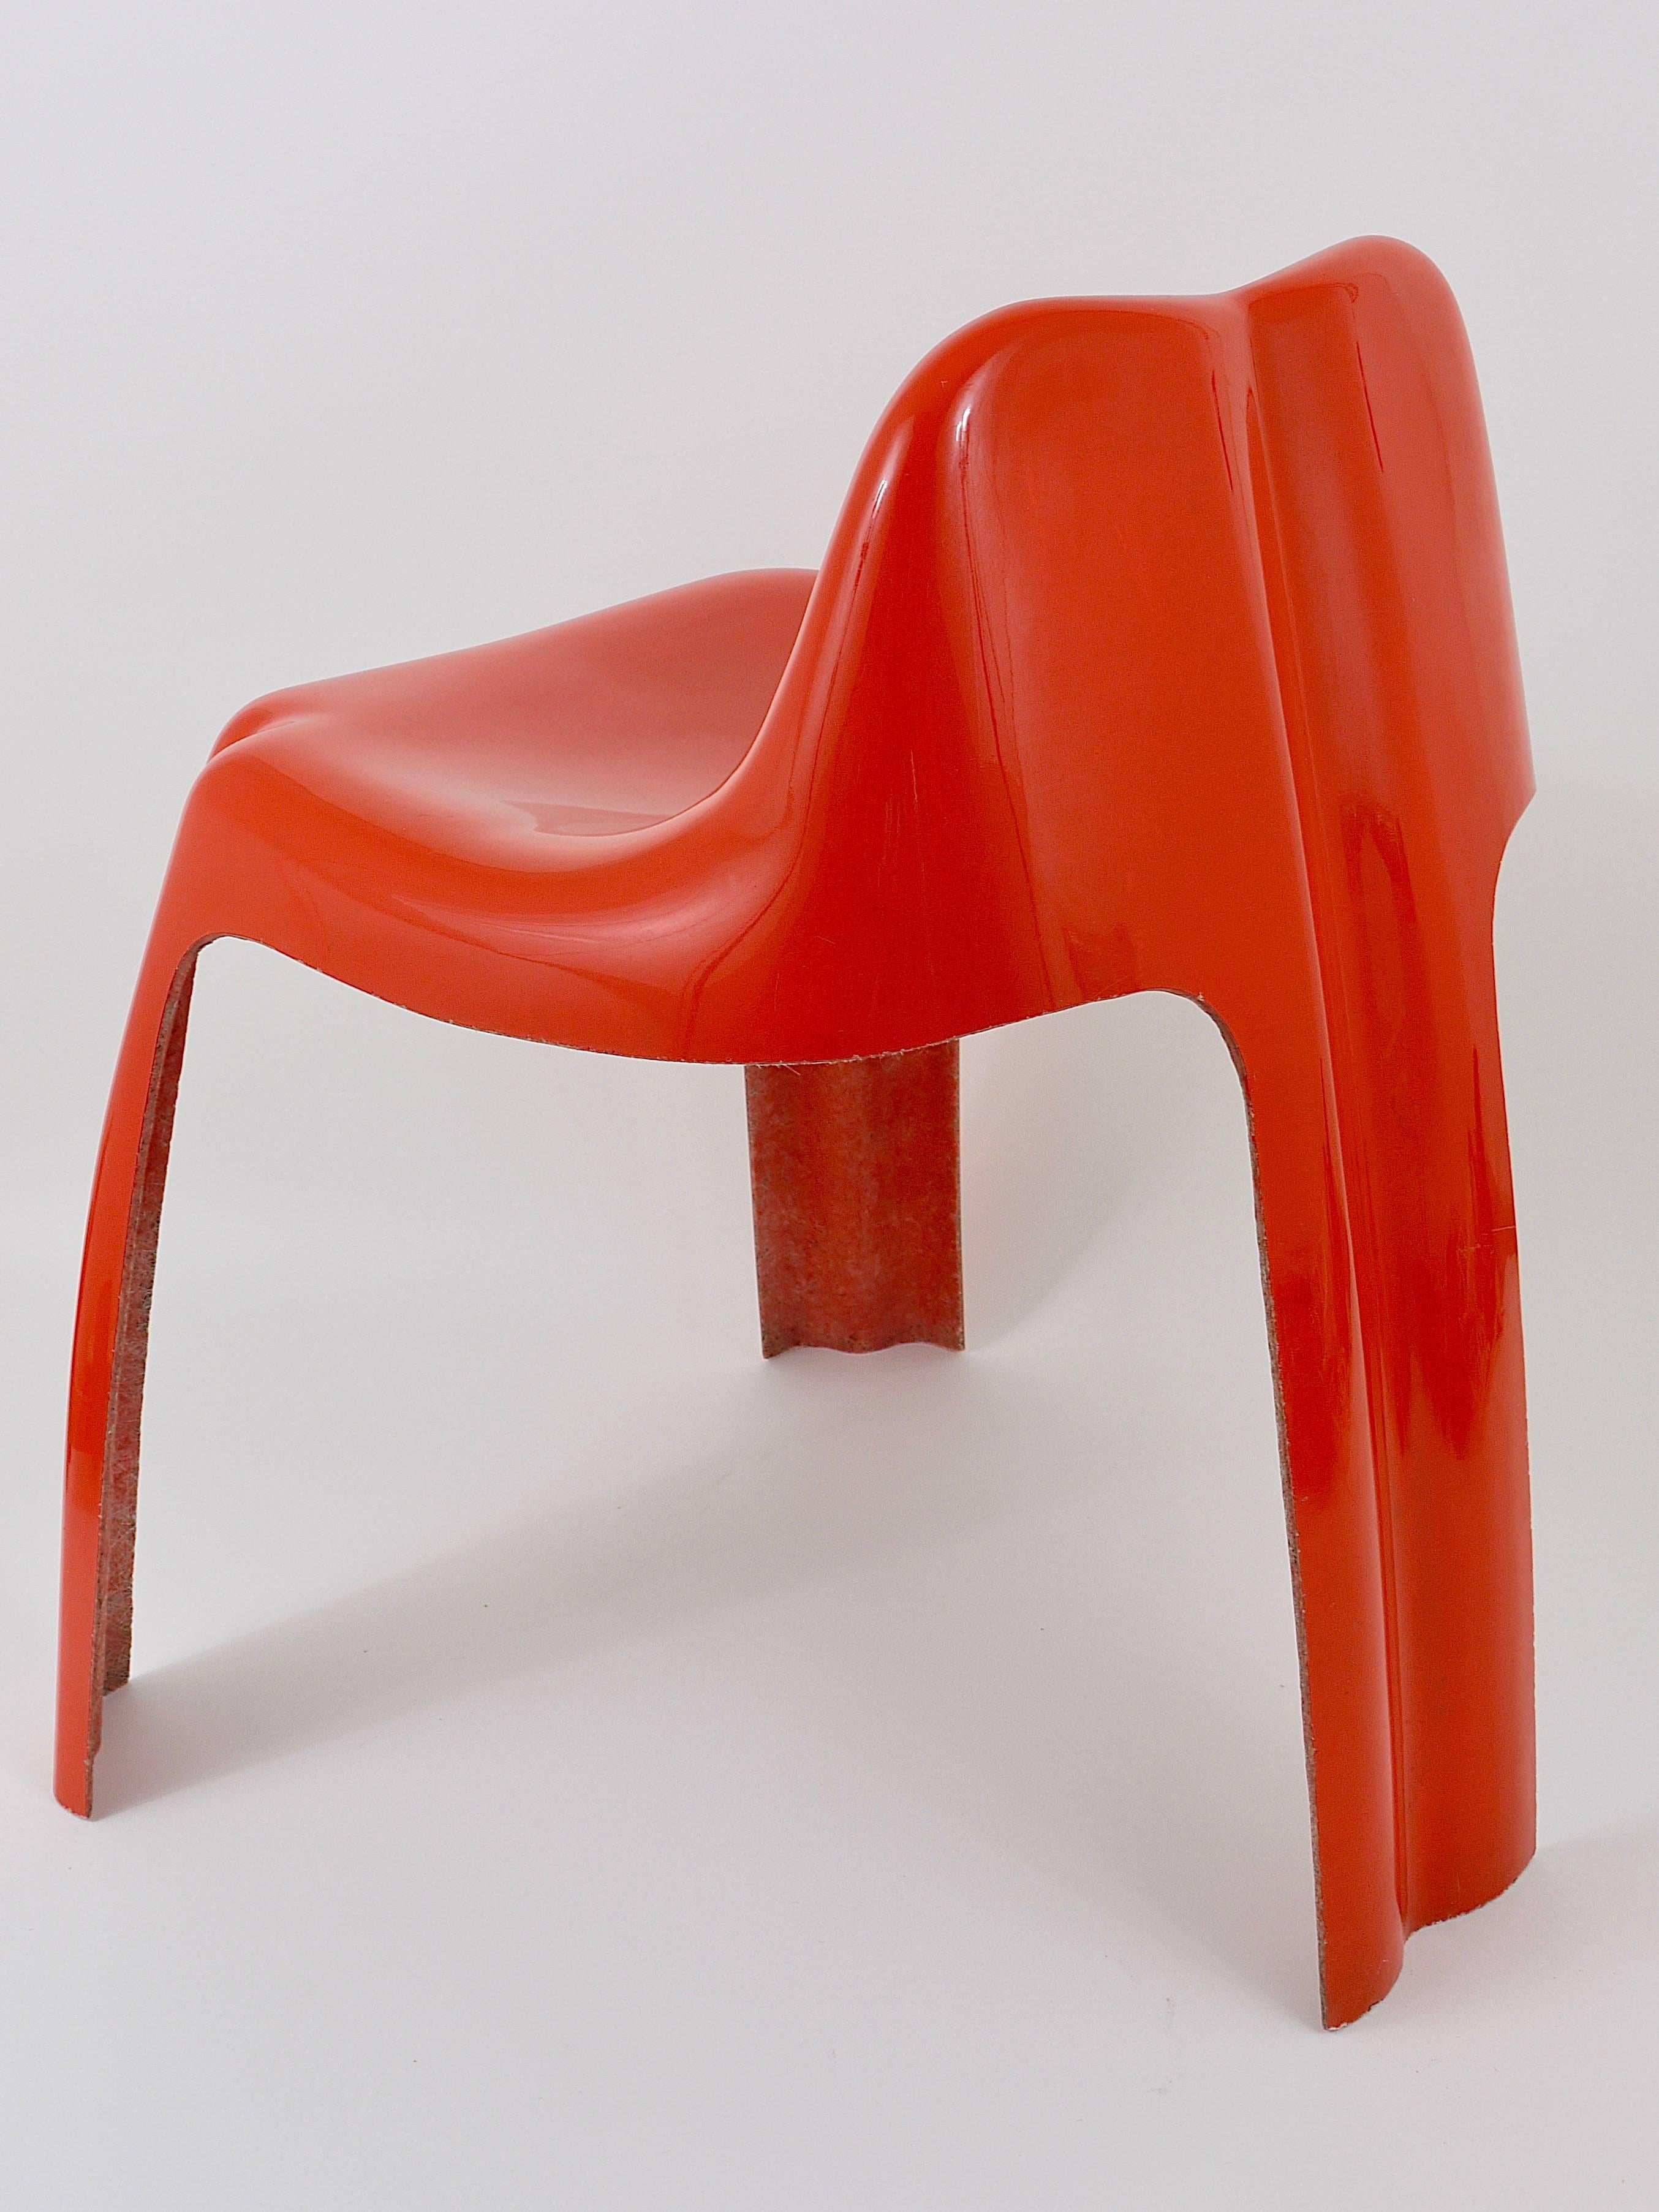 20th Century Patrick Gingembre Ginger Orange Fiberglass Chair Ginger, Paulus, France, 1970s For Sale